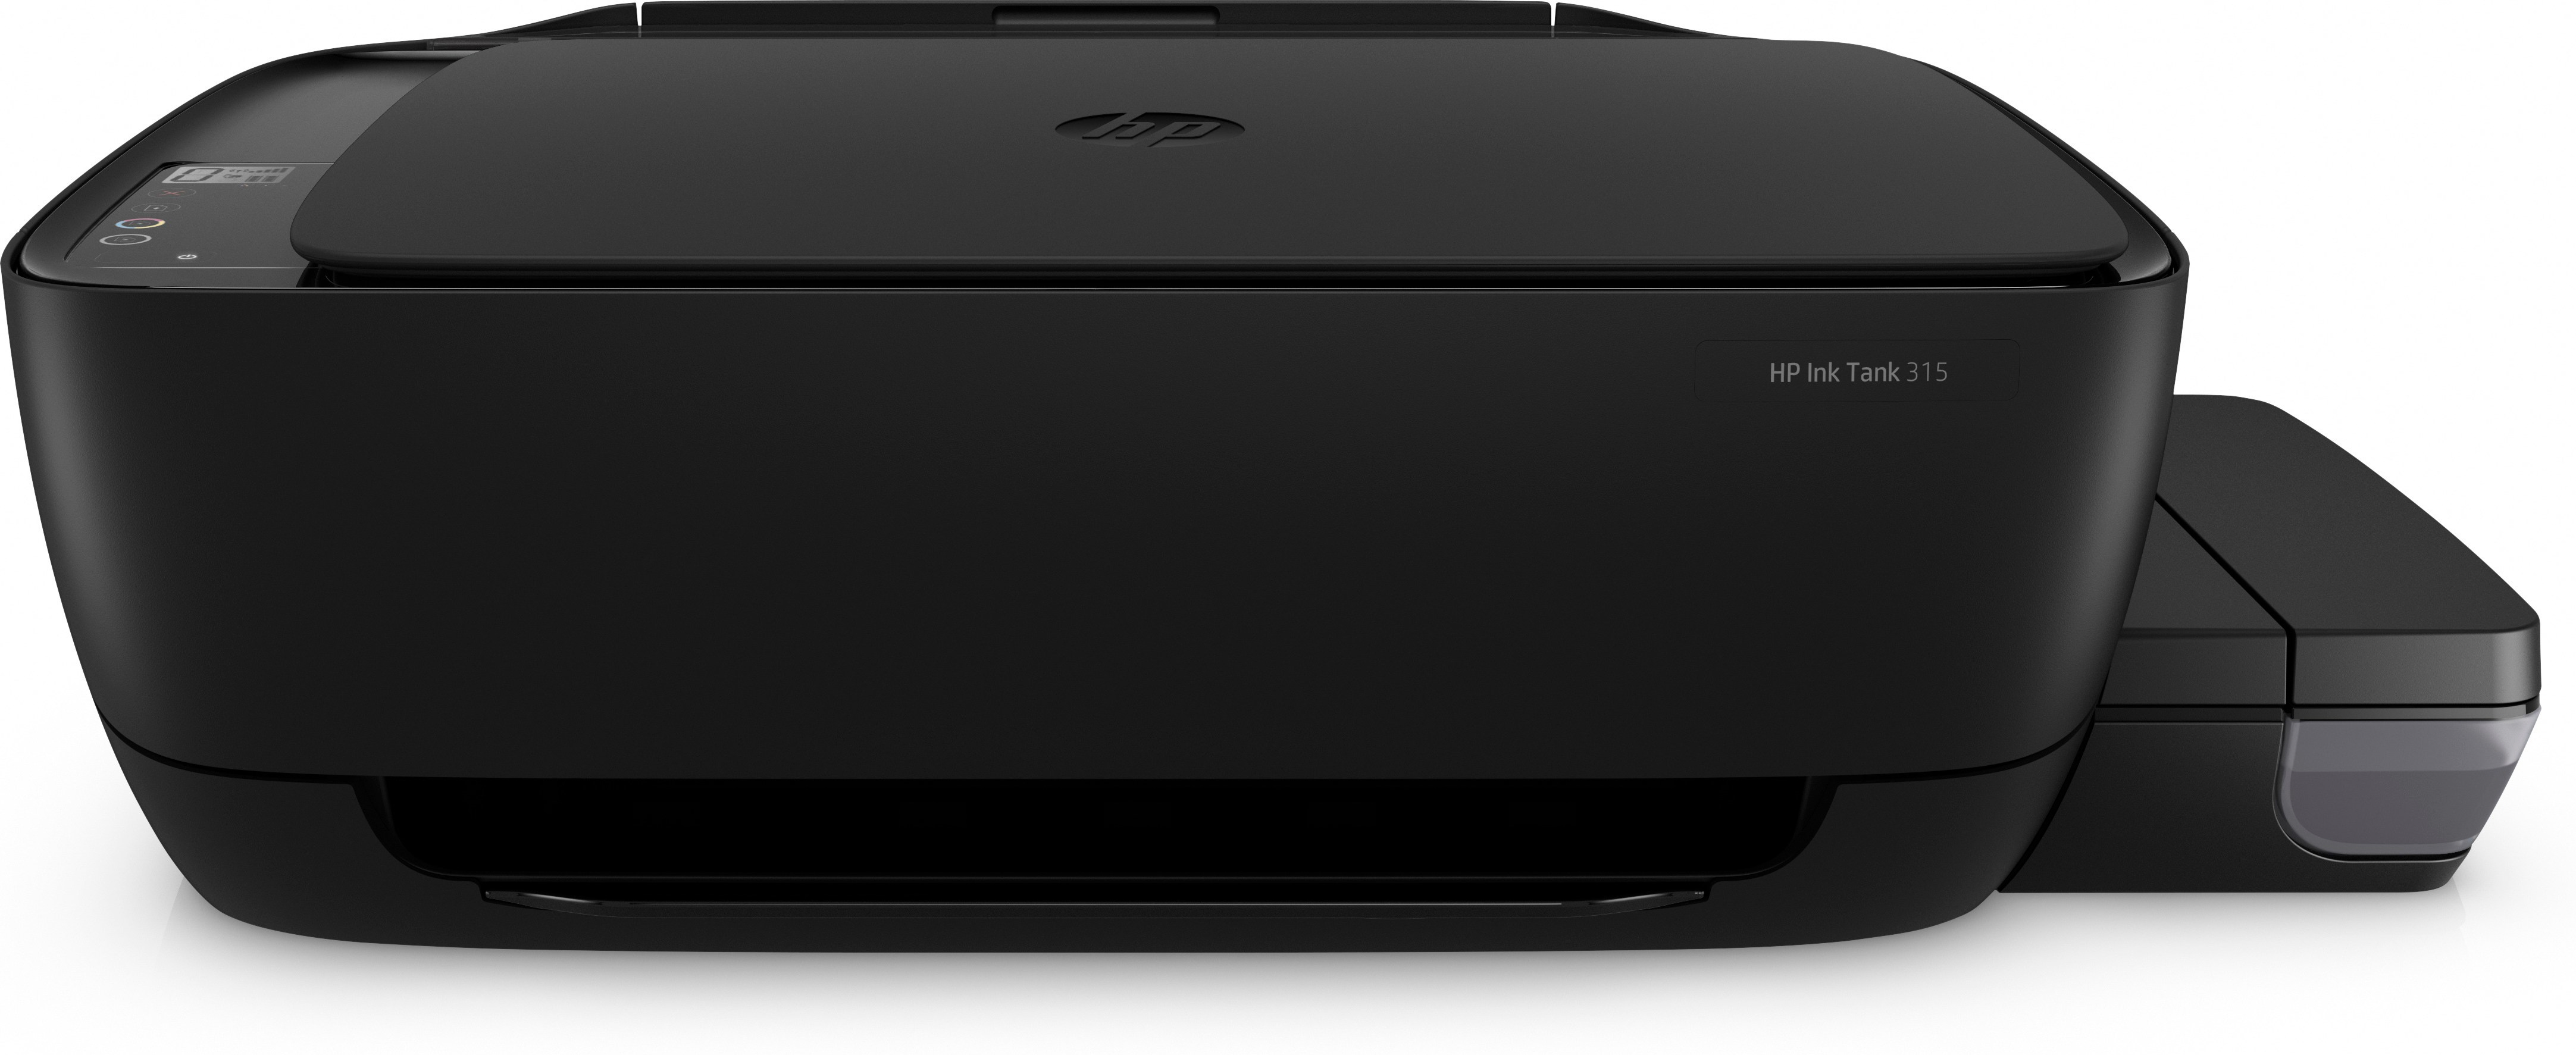 Impresora Multifuncional Hp Ink Tank 315 Z4B04A